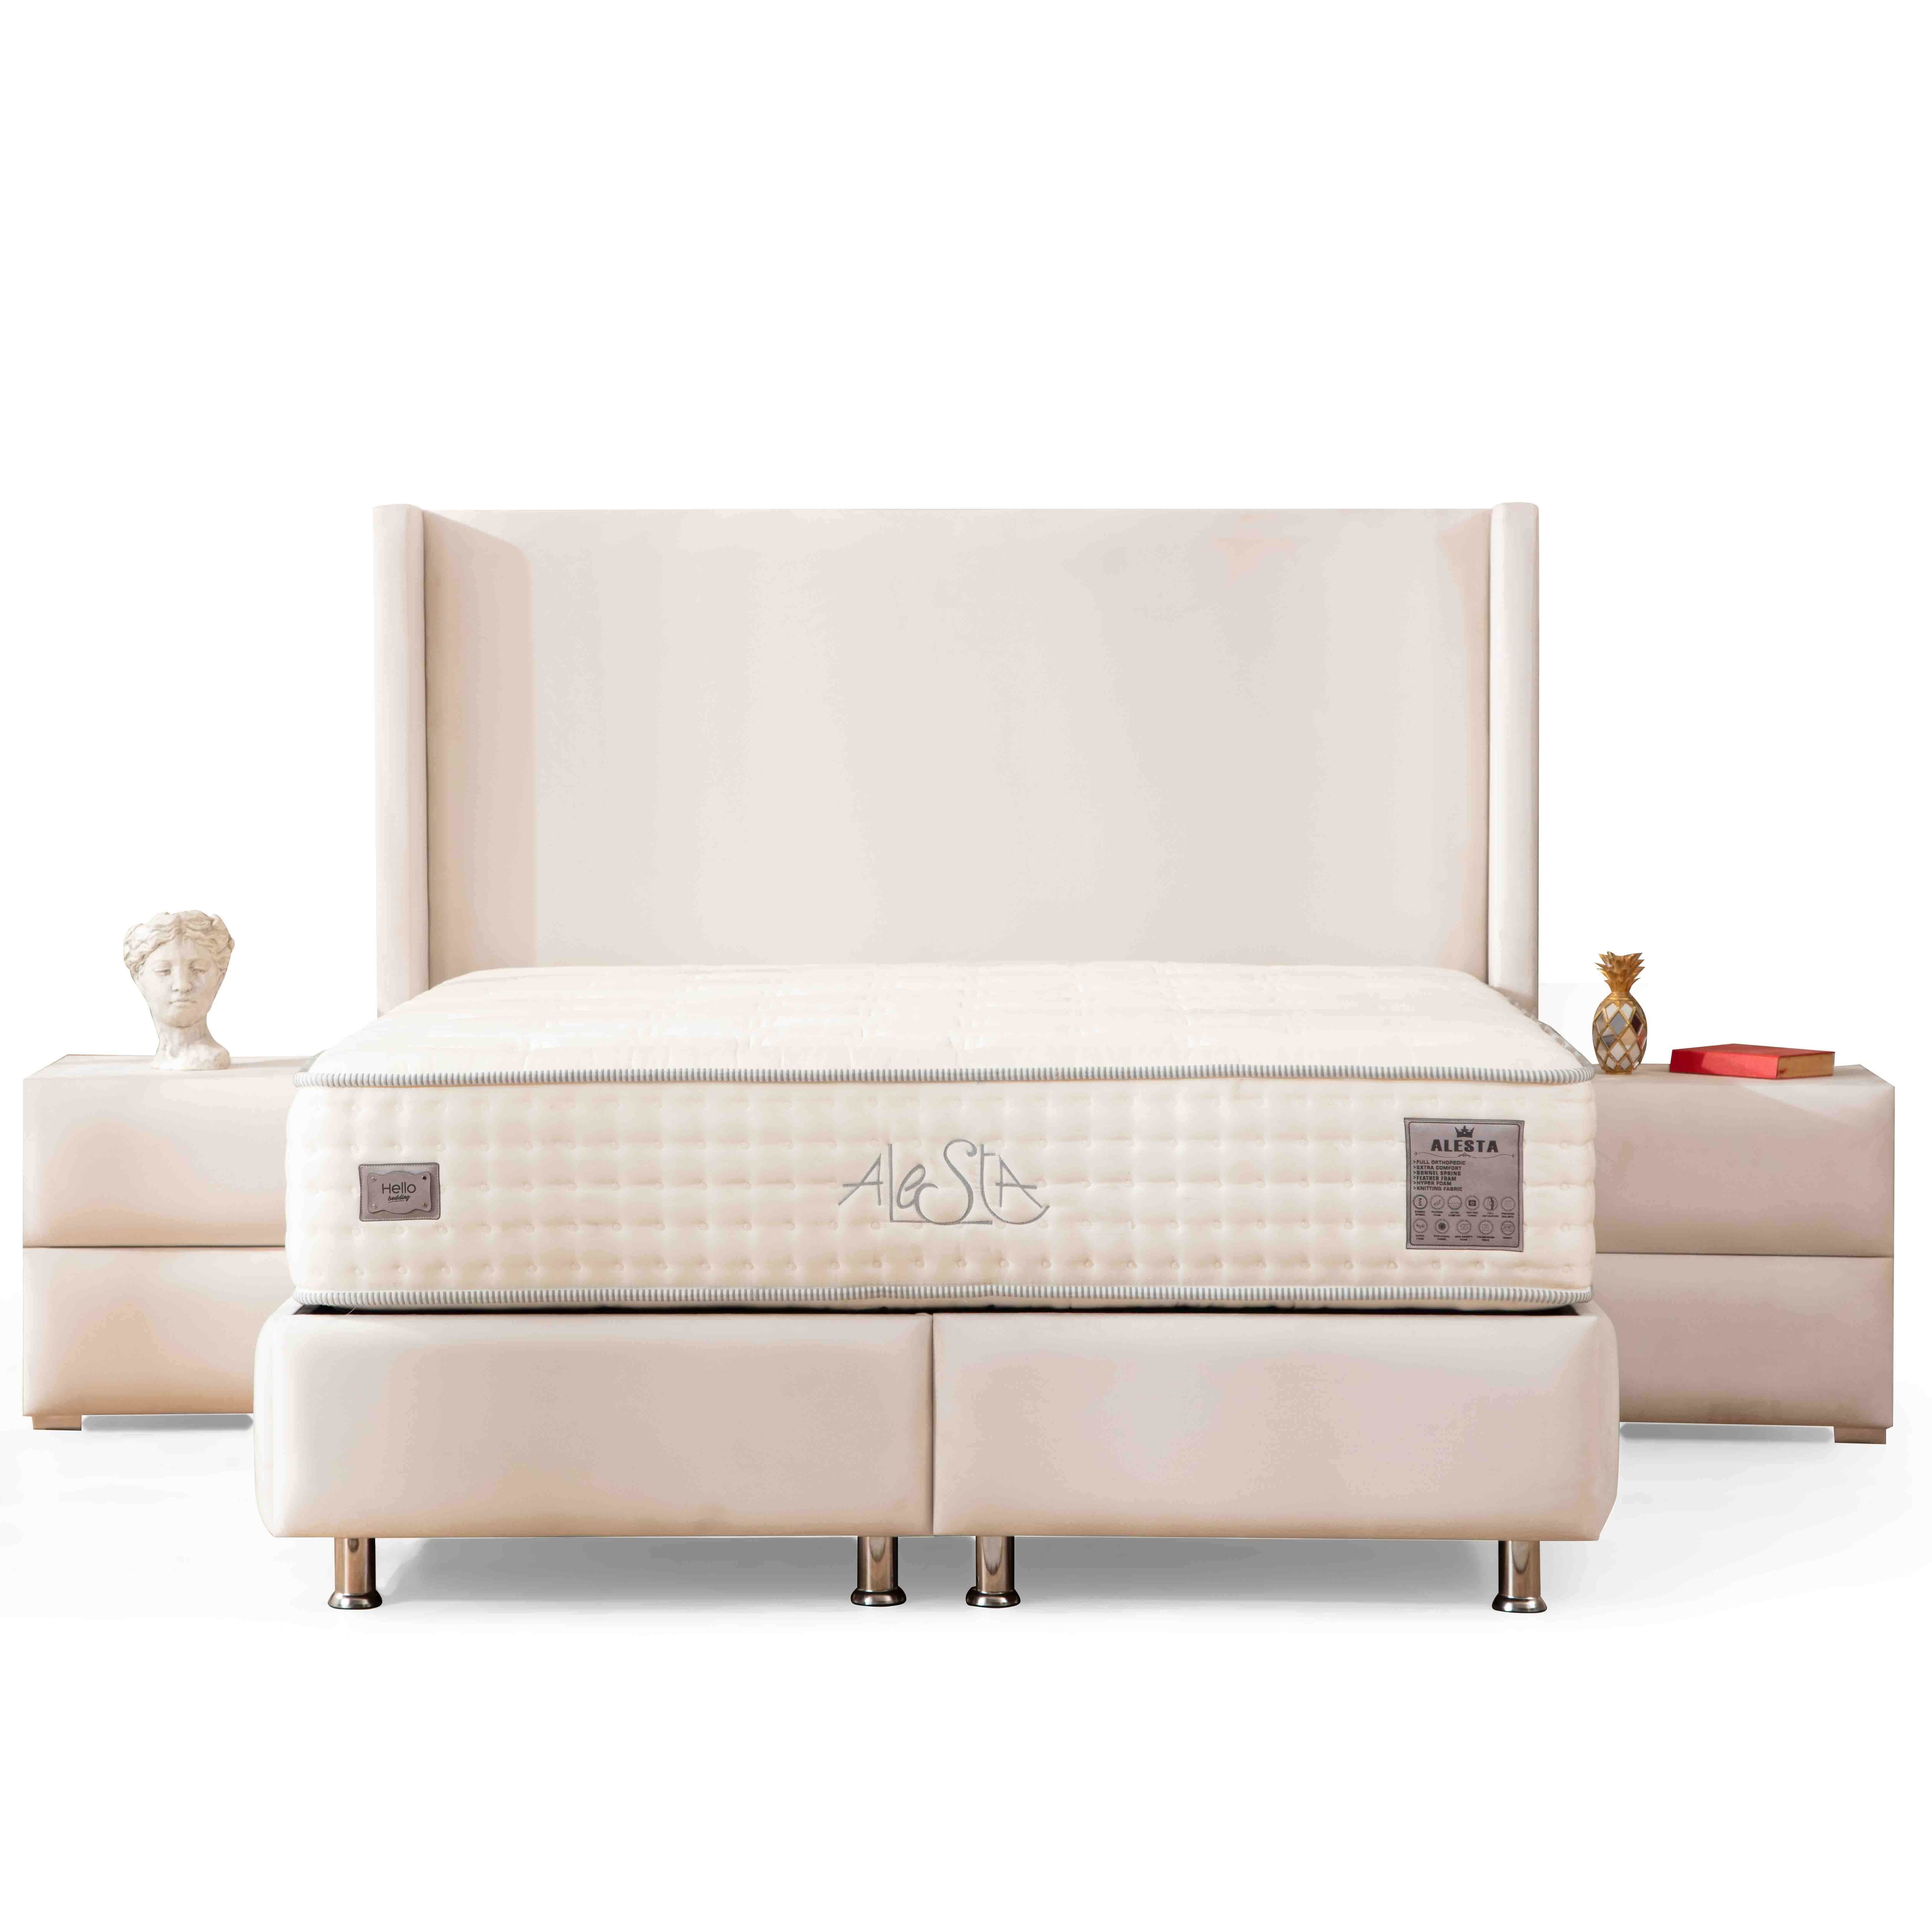 Lucca Bed Sets 160*200